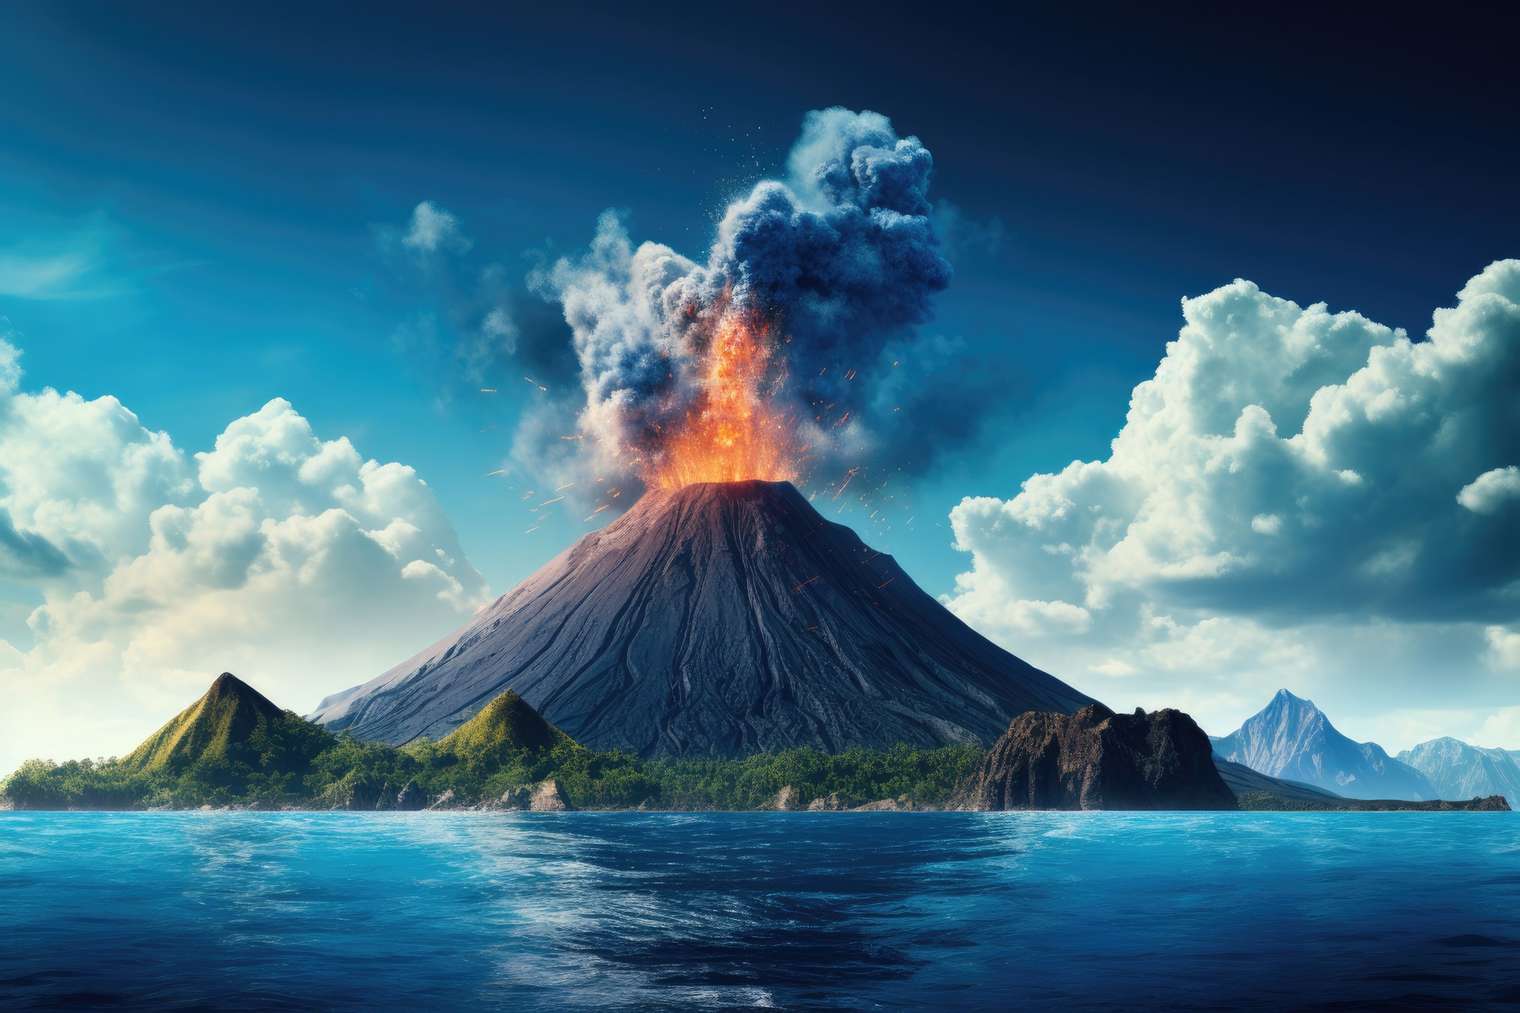 Quoi de neuf aujourd'hui  - Page 20 Volcan-indonesie-eruption-%201920%20px